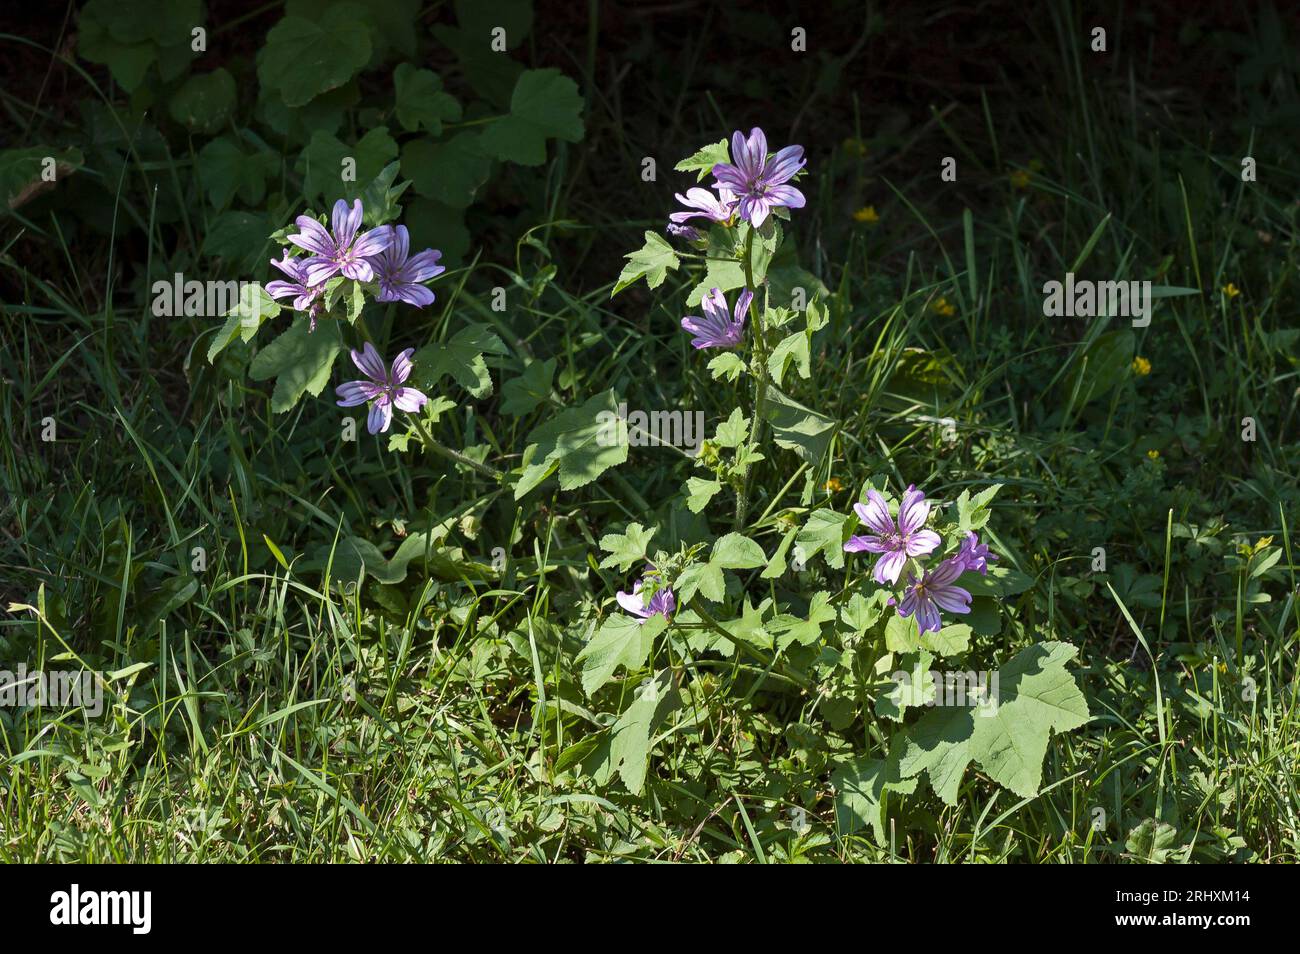 A look at Common mallow or Malva sylvestris for herbal medicine, Sofia, Bulgaria Stock Photo